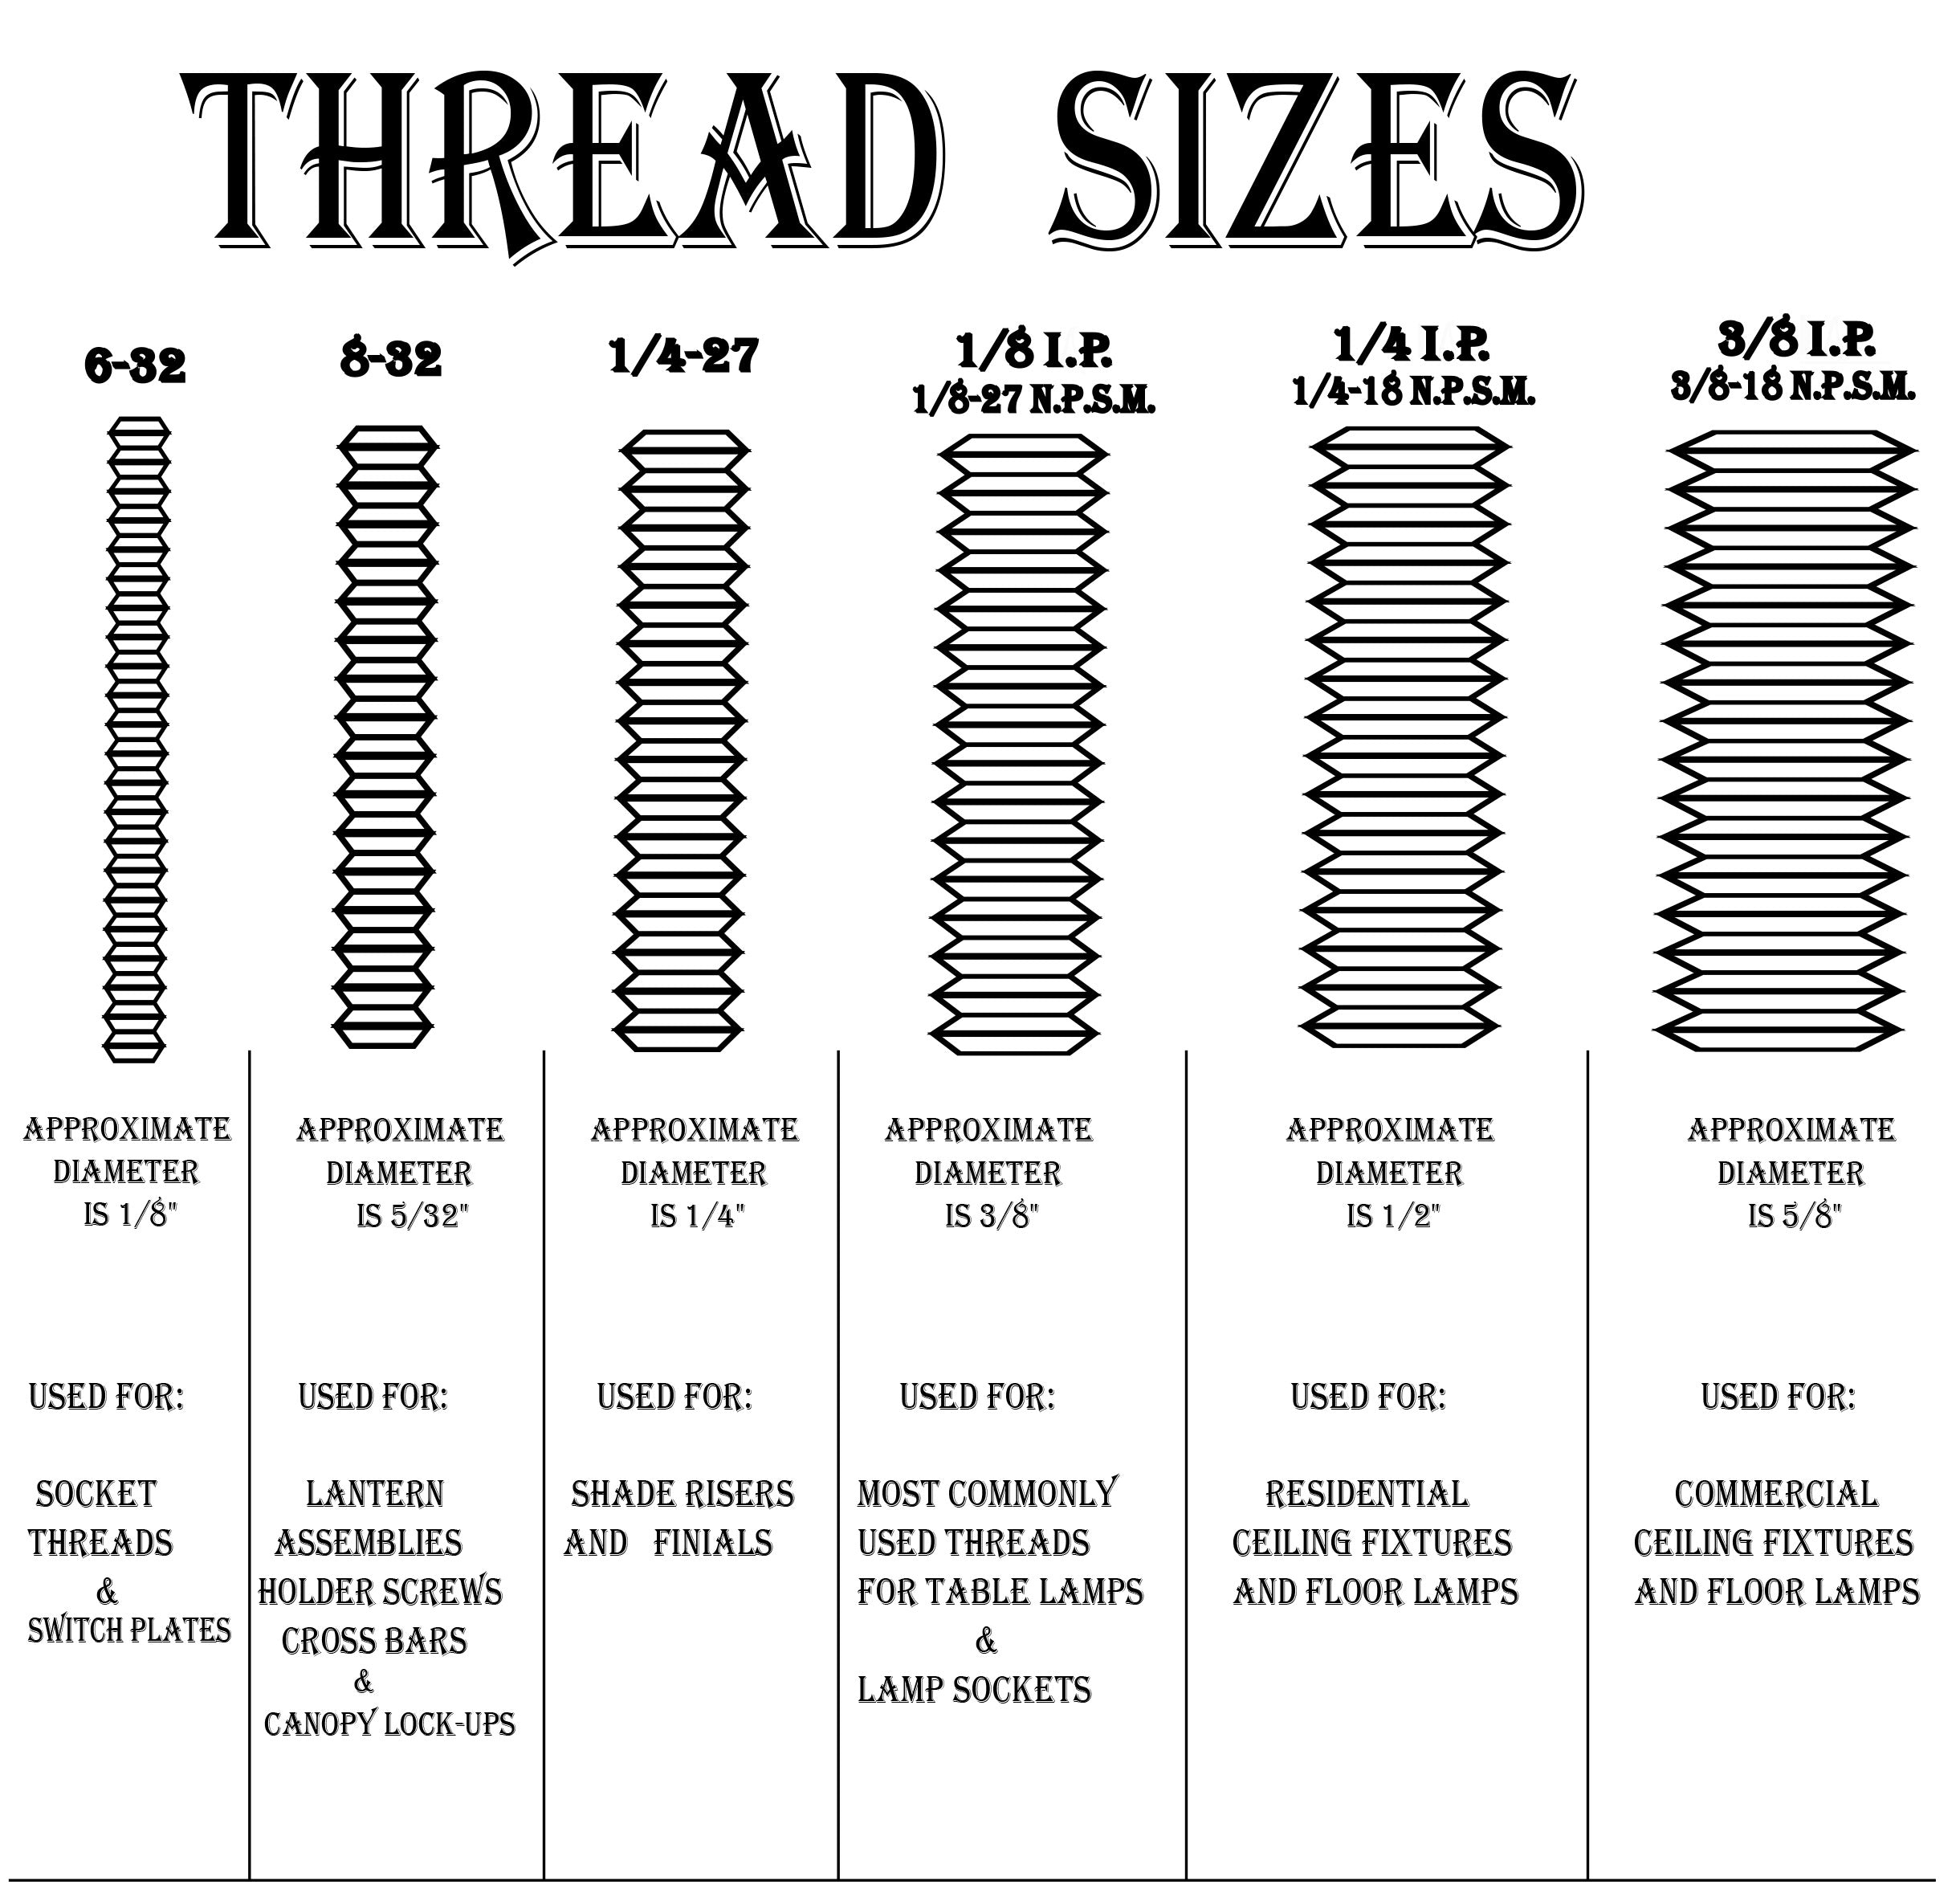 2 Foot Length All Thread Steel rod - 10/24